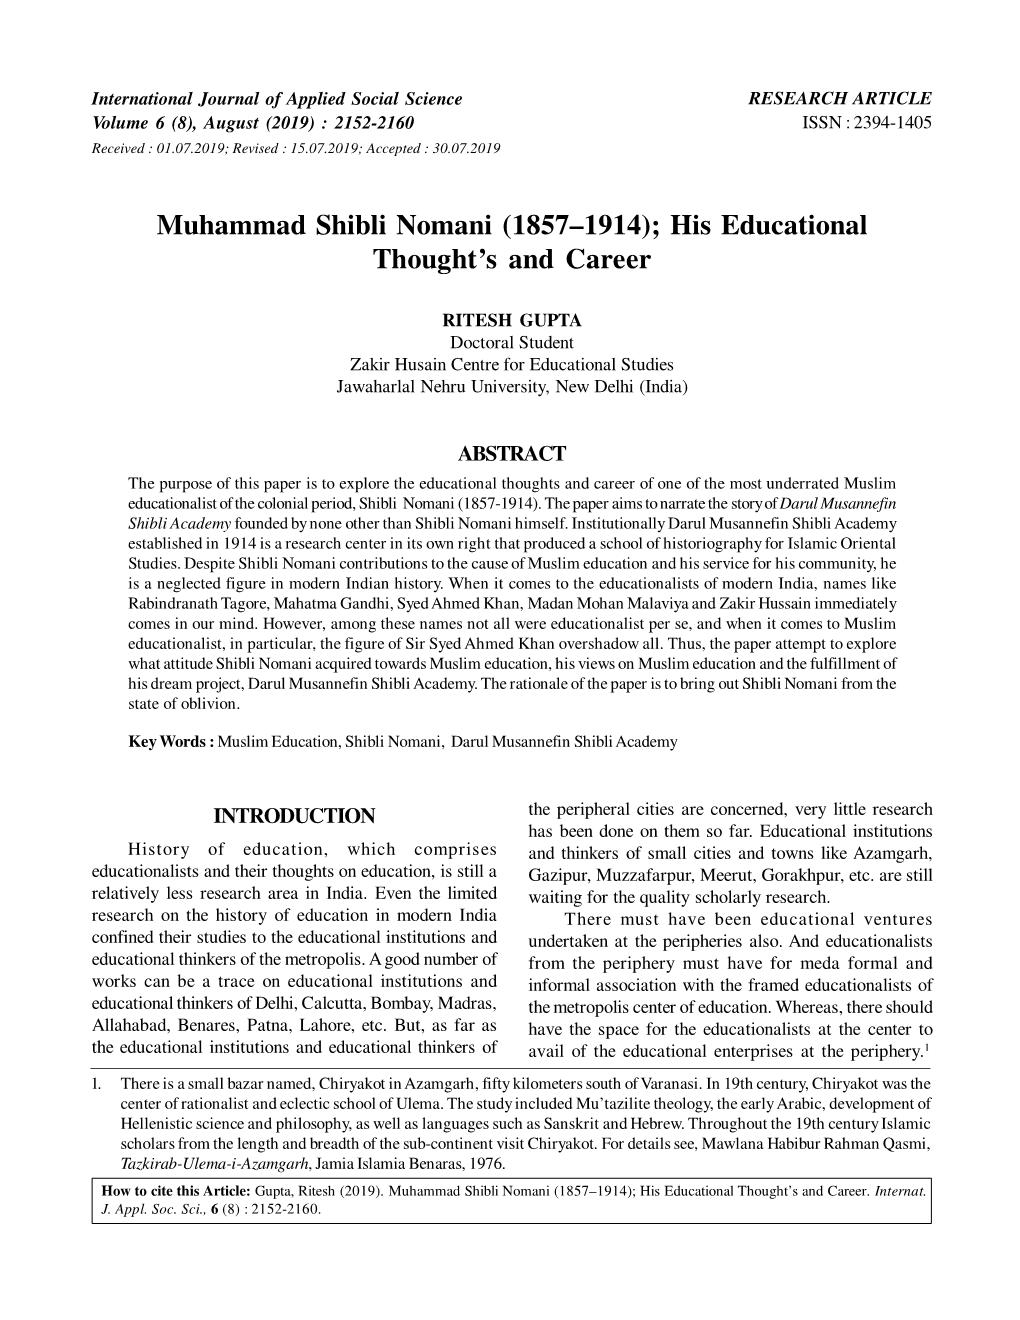 Muhammad Shibli Nomani (1857–1914); His Educational Thought’S and Career